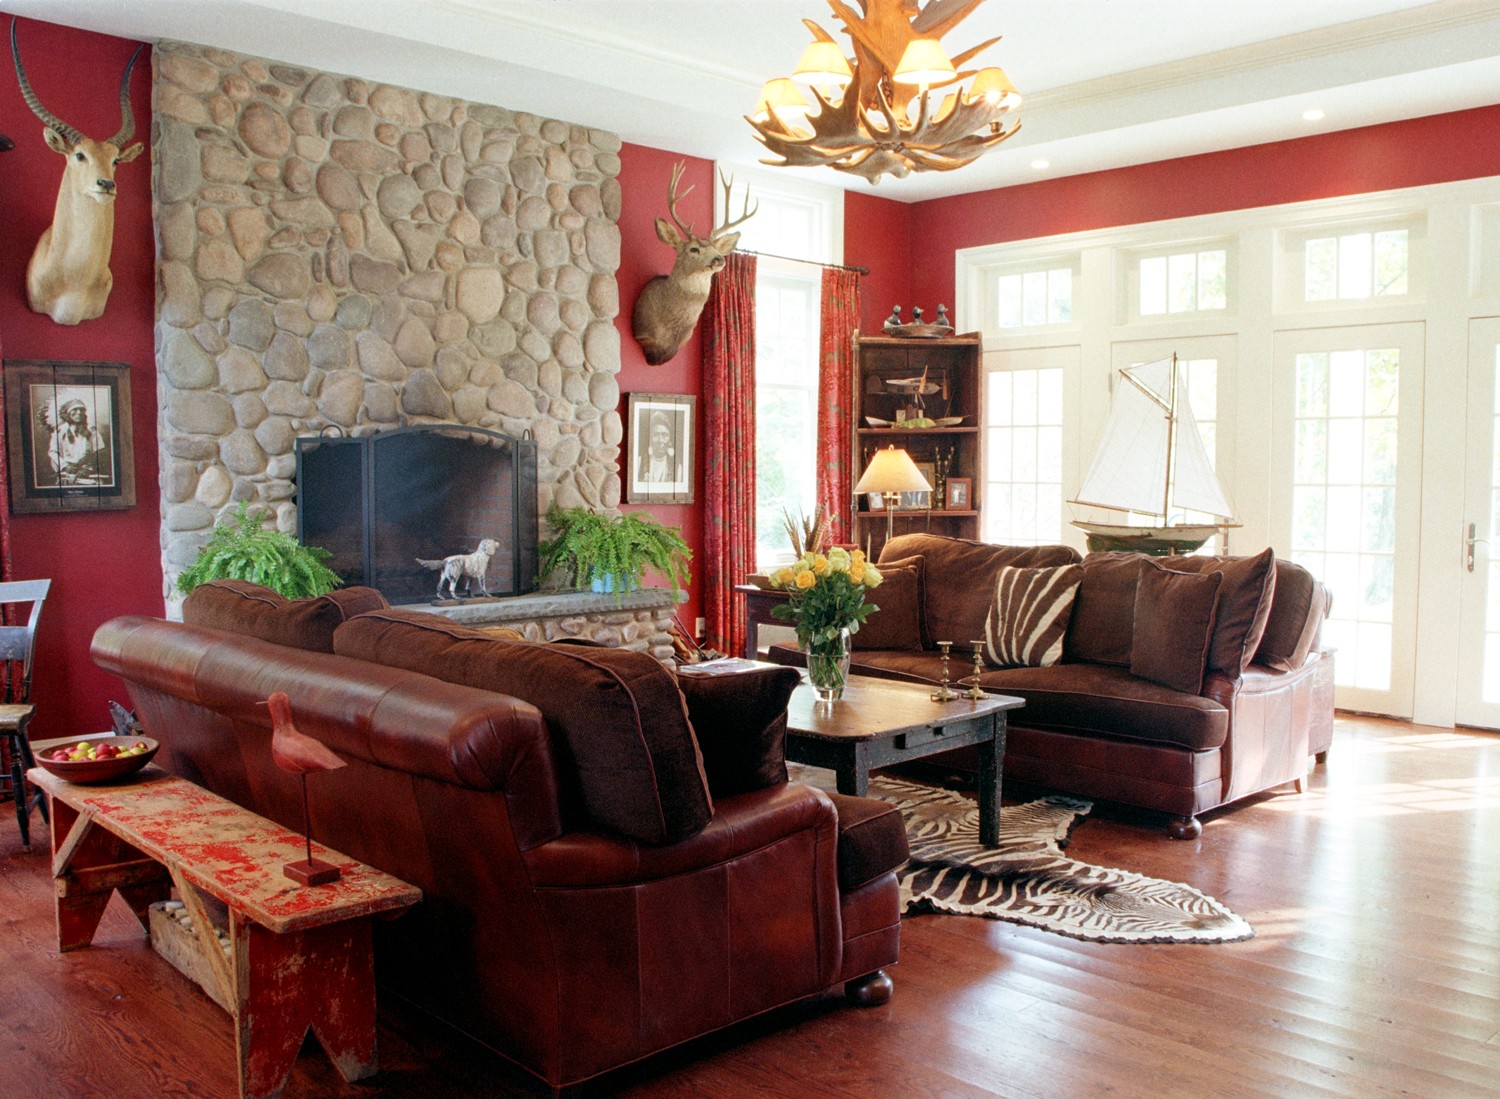 Creative Design Ideas For Decorating A Living Room | Dream House ...